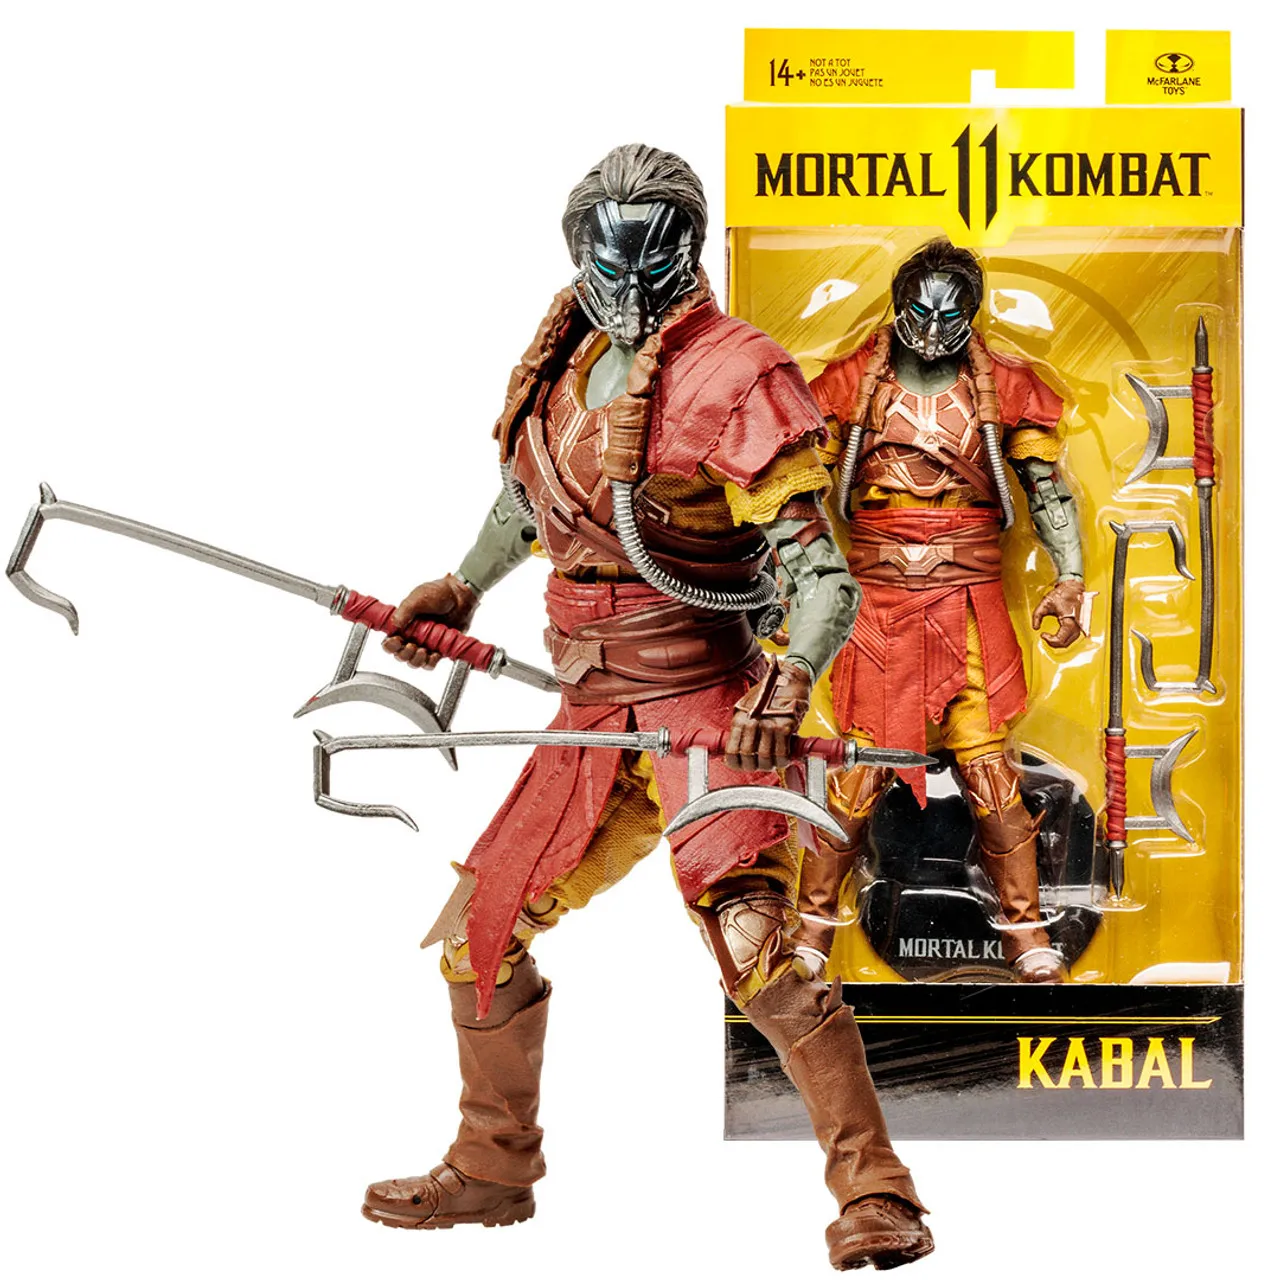 Mcfarlane Mortal Kombat Kabal Rapid Figura De Acción Articulada Roja Juguetes 17cm Aliexpress